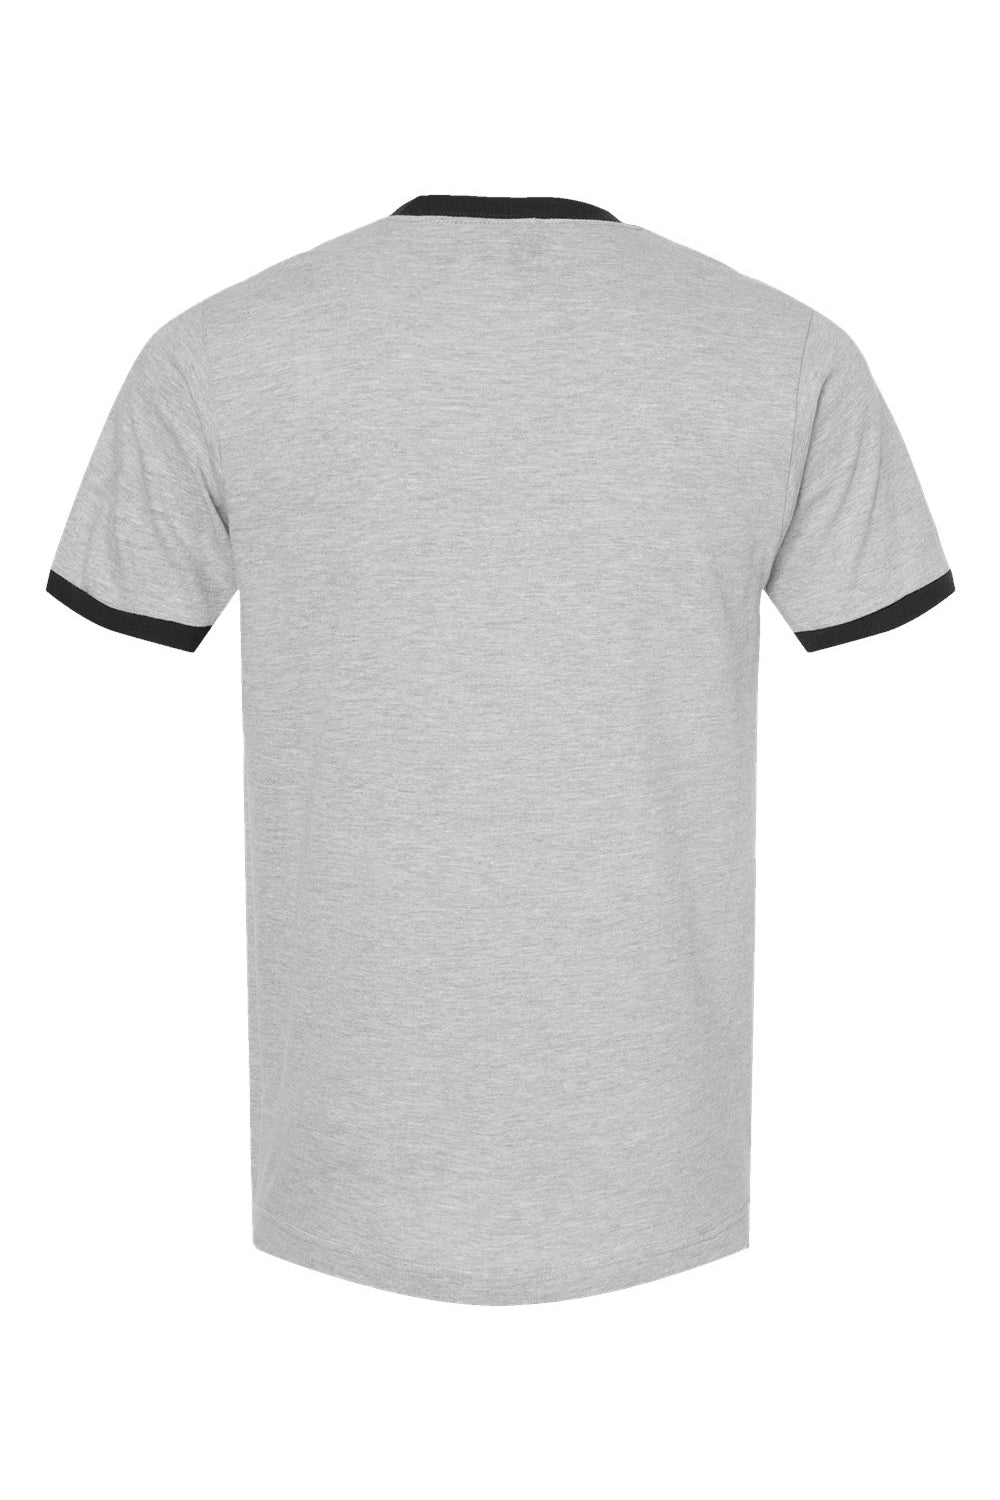 Tultex 246 Mens Fine Jersey Ringer Short Sleeve Crewneck T-Shirt Heather Grey/Black Flat Back